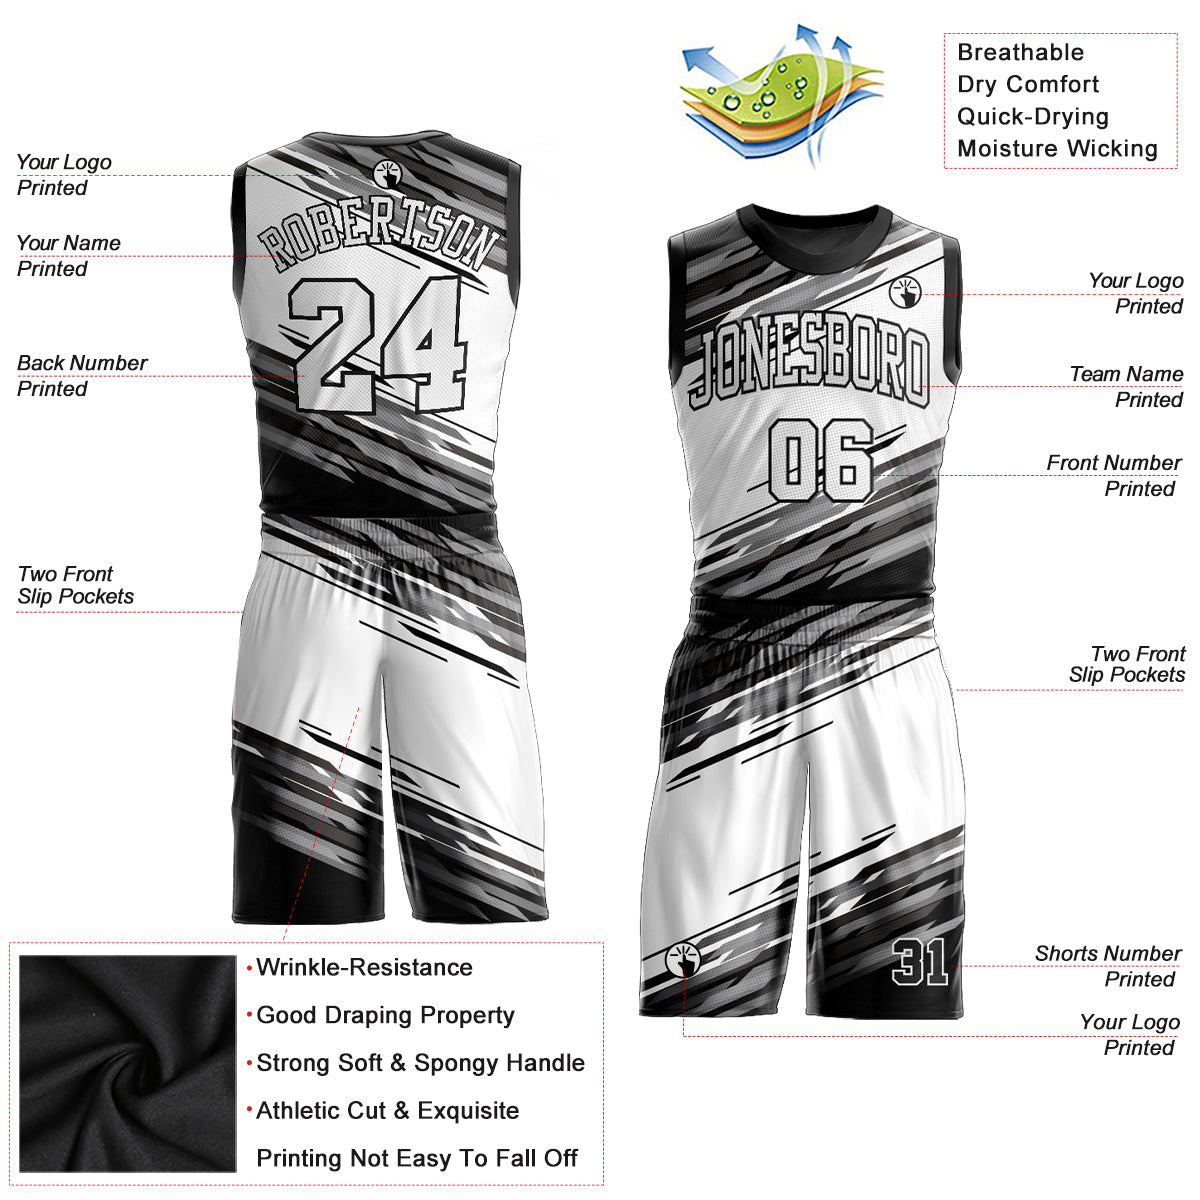 Wholesale Custom Black Basketball Uniforms Sublimation Design